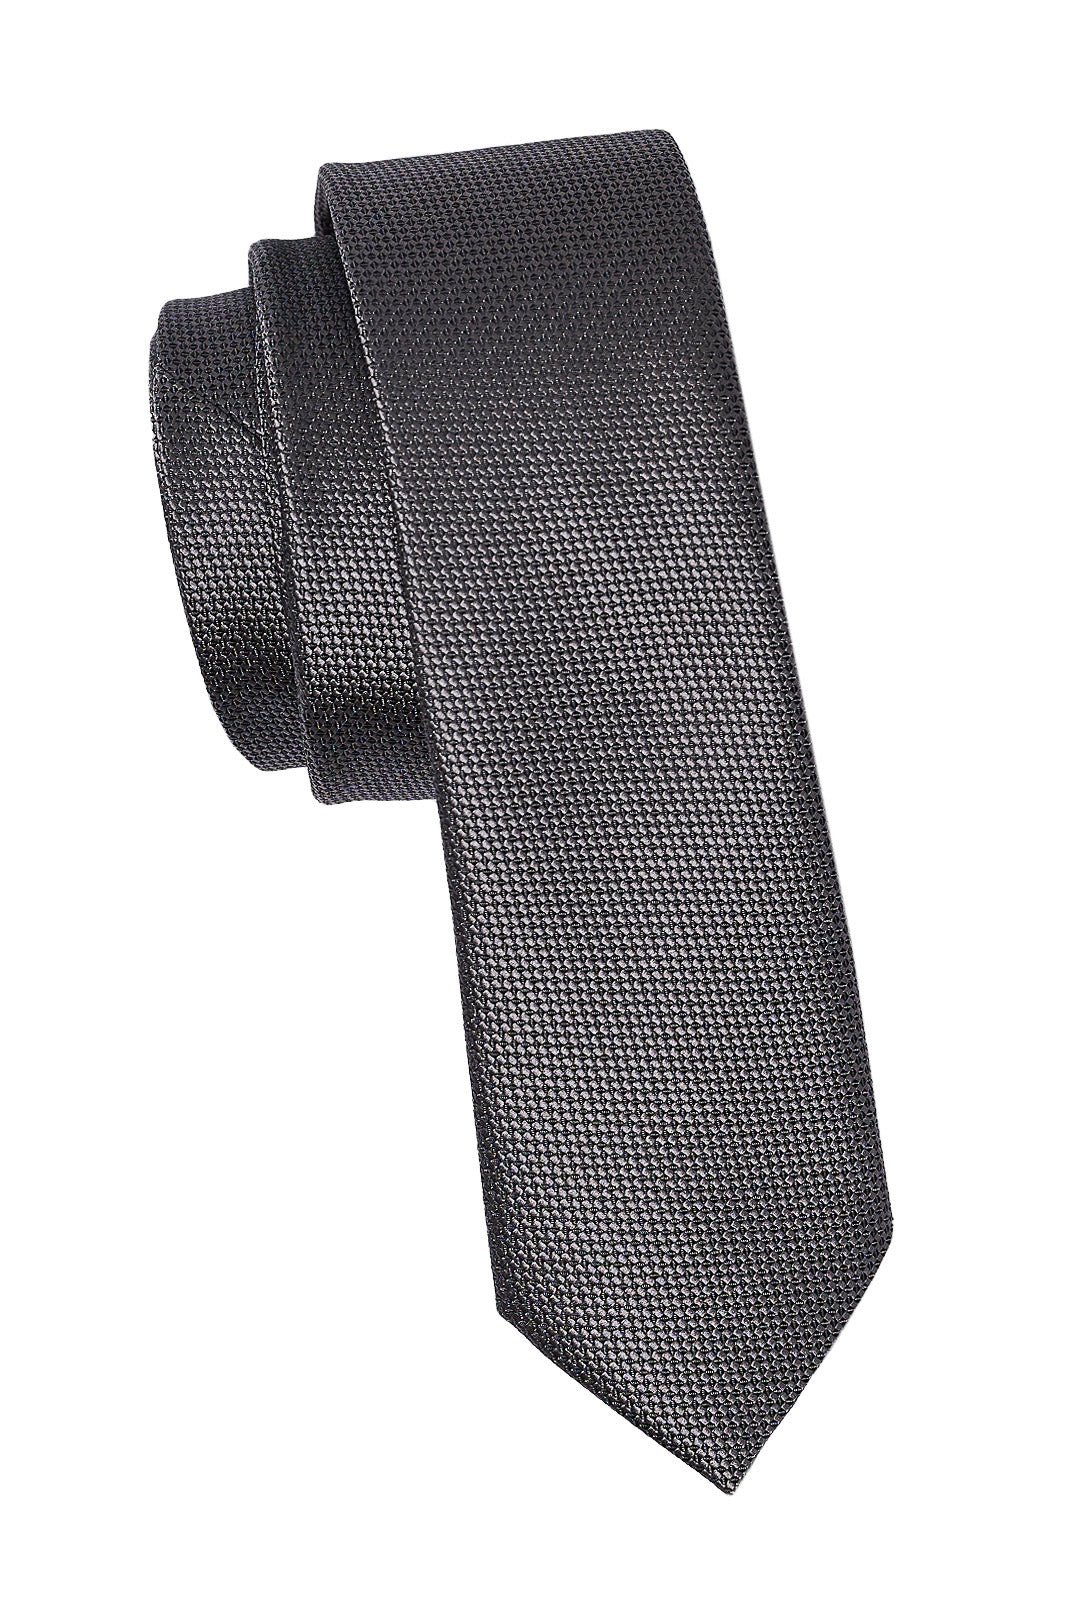 Black Patterned Gray Tie